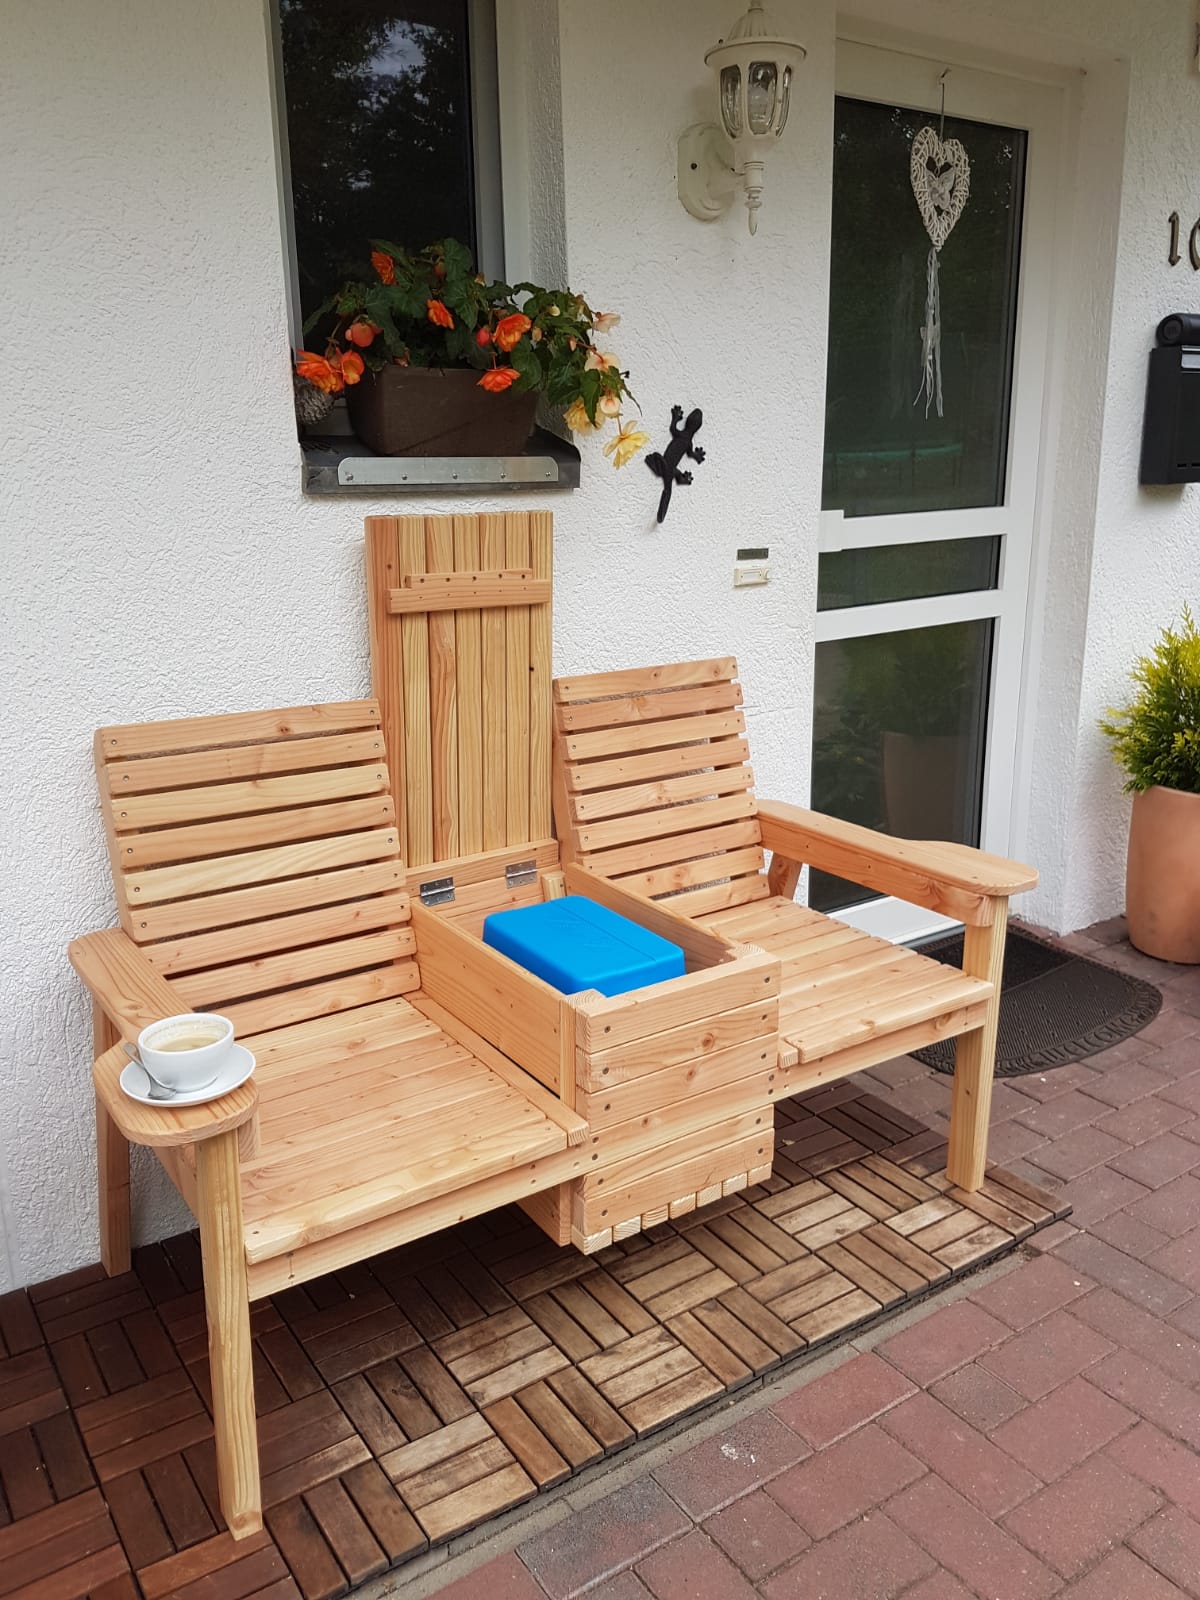 DIY Double Chair Bench with Cooler MyOutdoorPlans Free ...